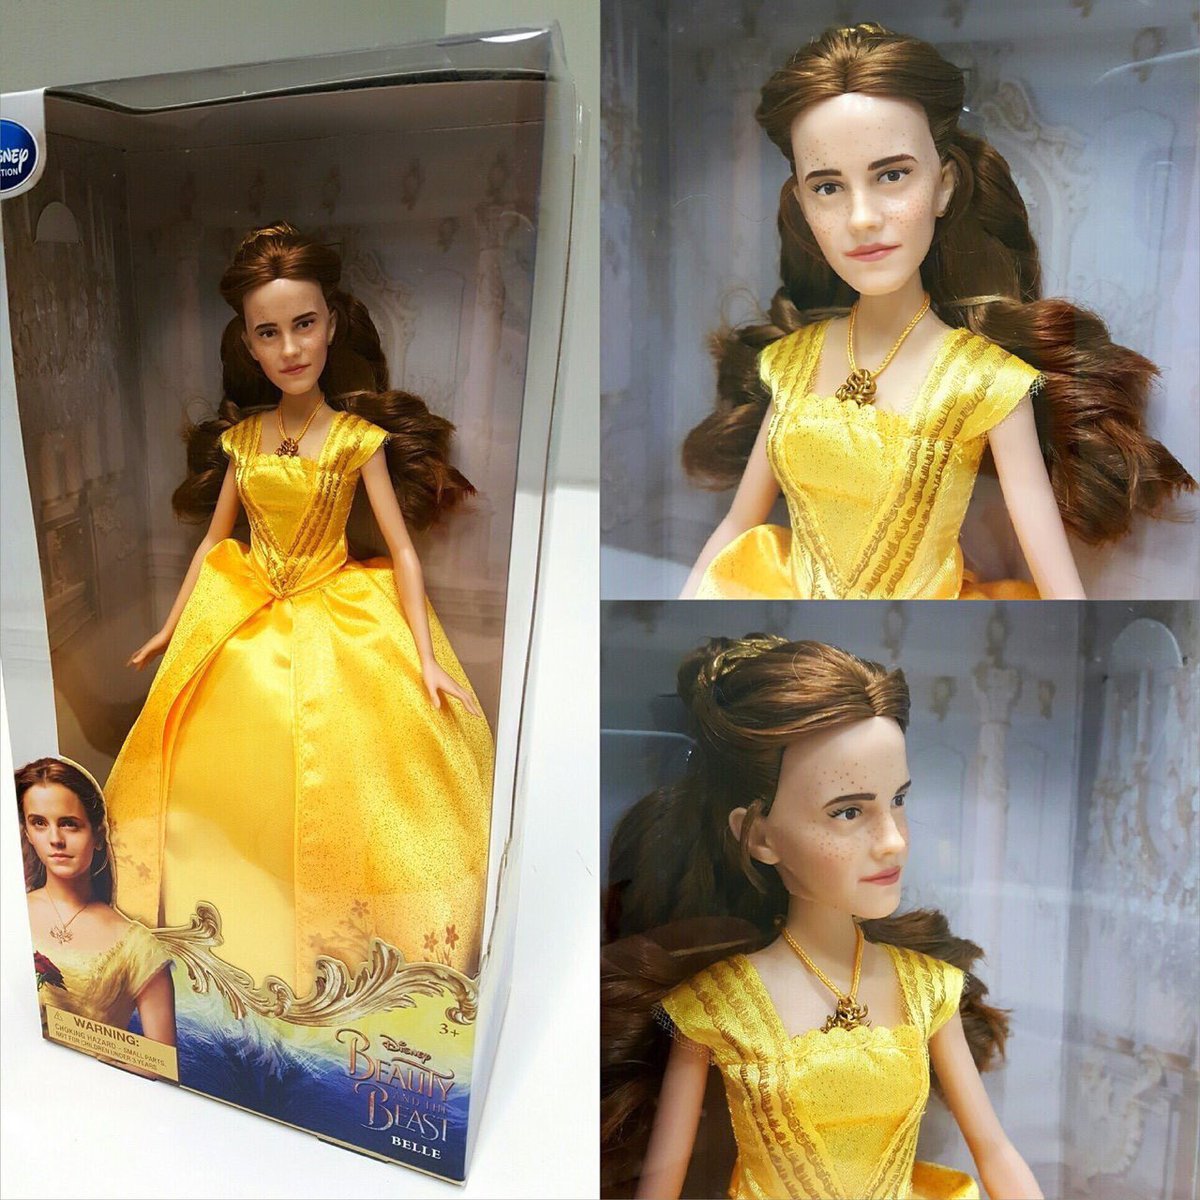 Muñeca de "Disney" inspirada en la Bella de Emma Watson | William Herrington